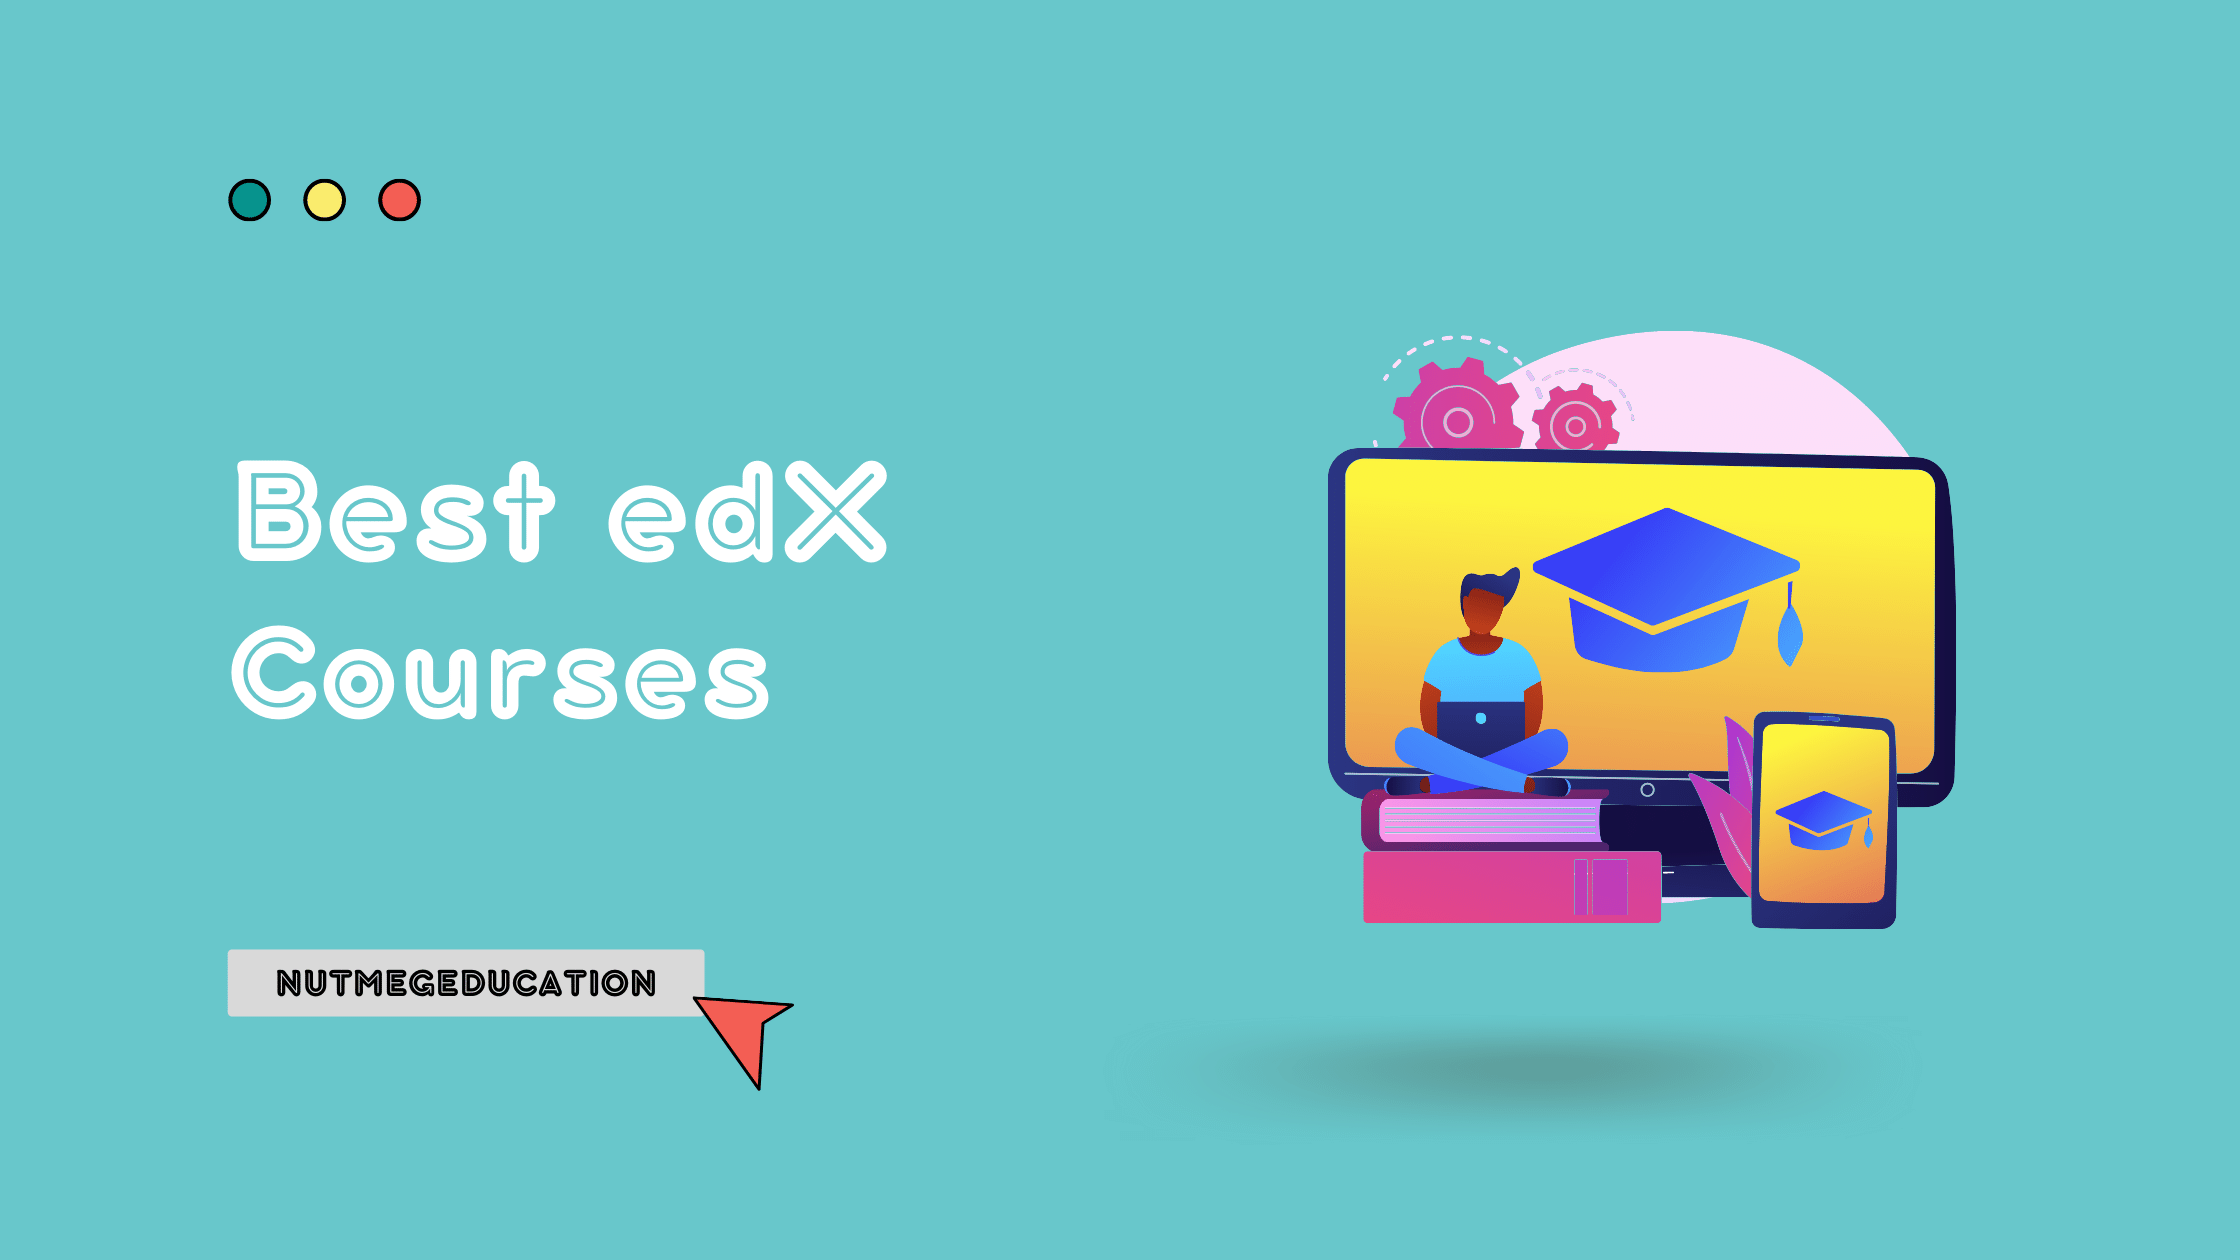 Best edX Courses - NutMegEducation